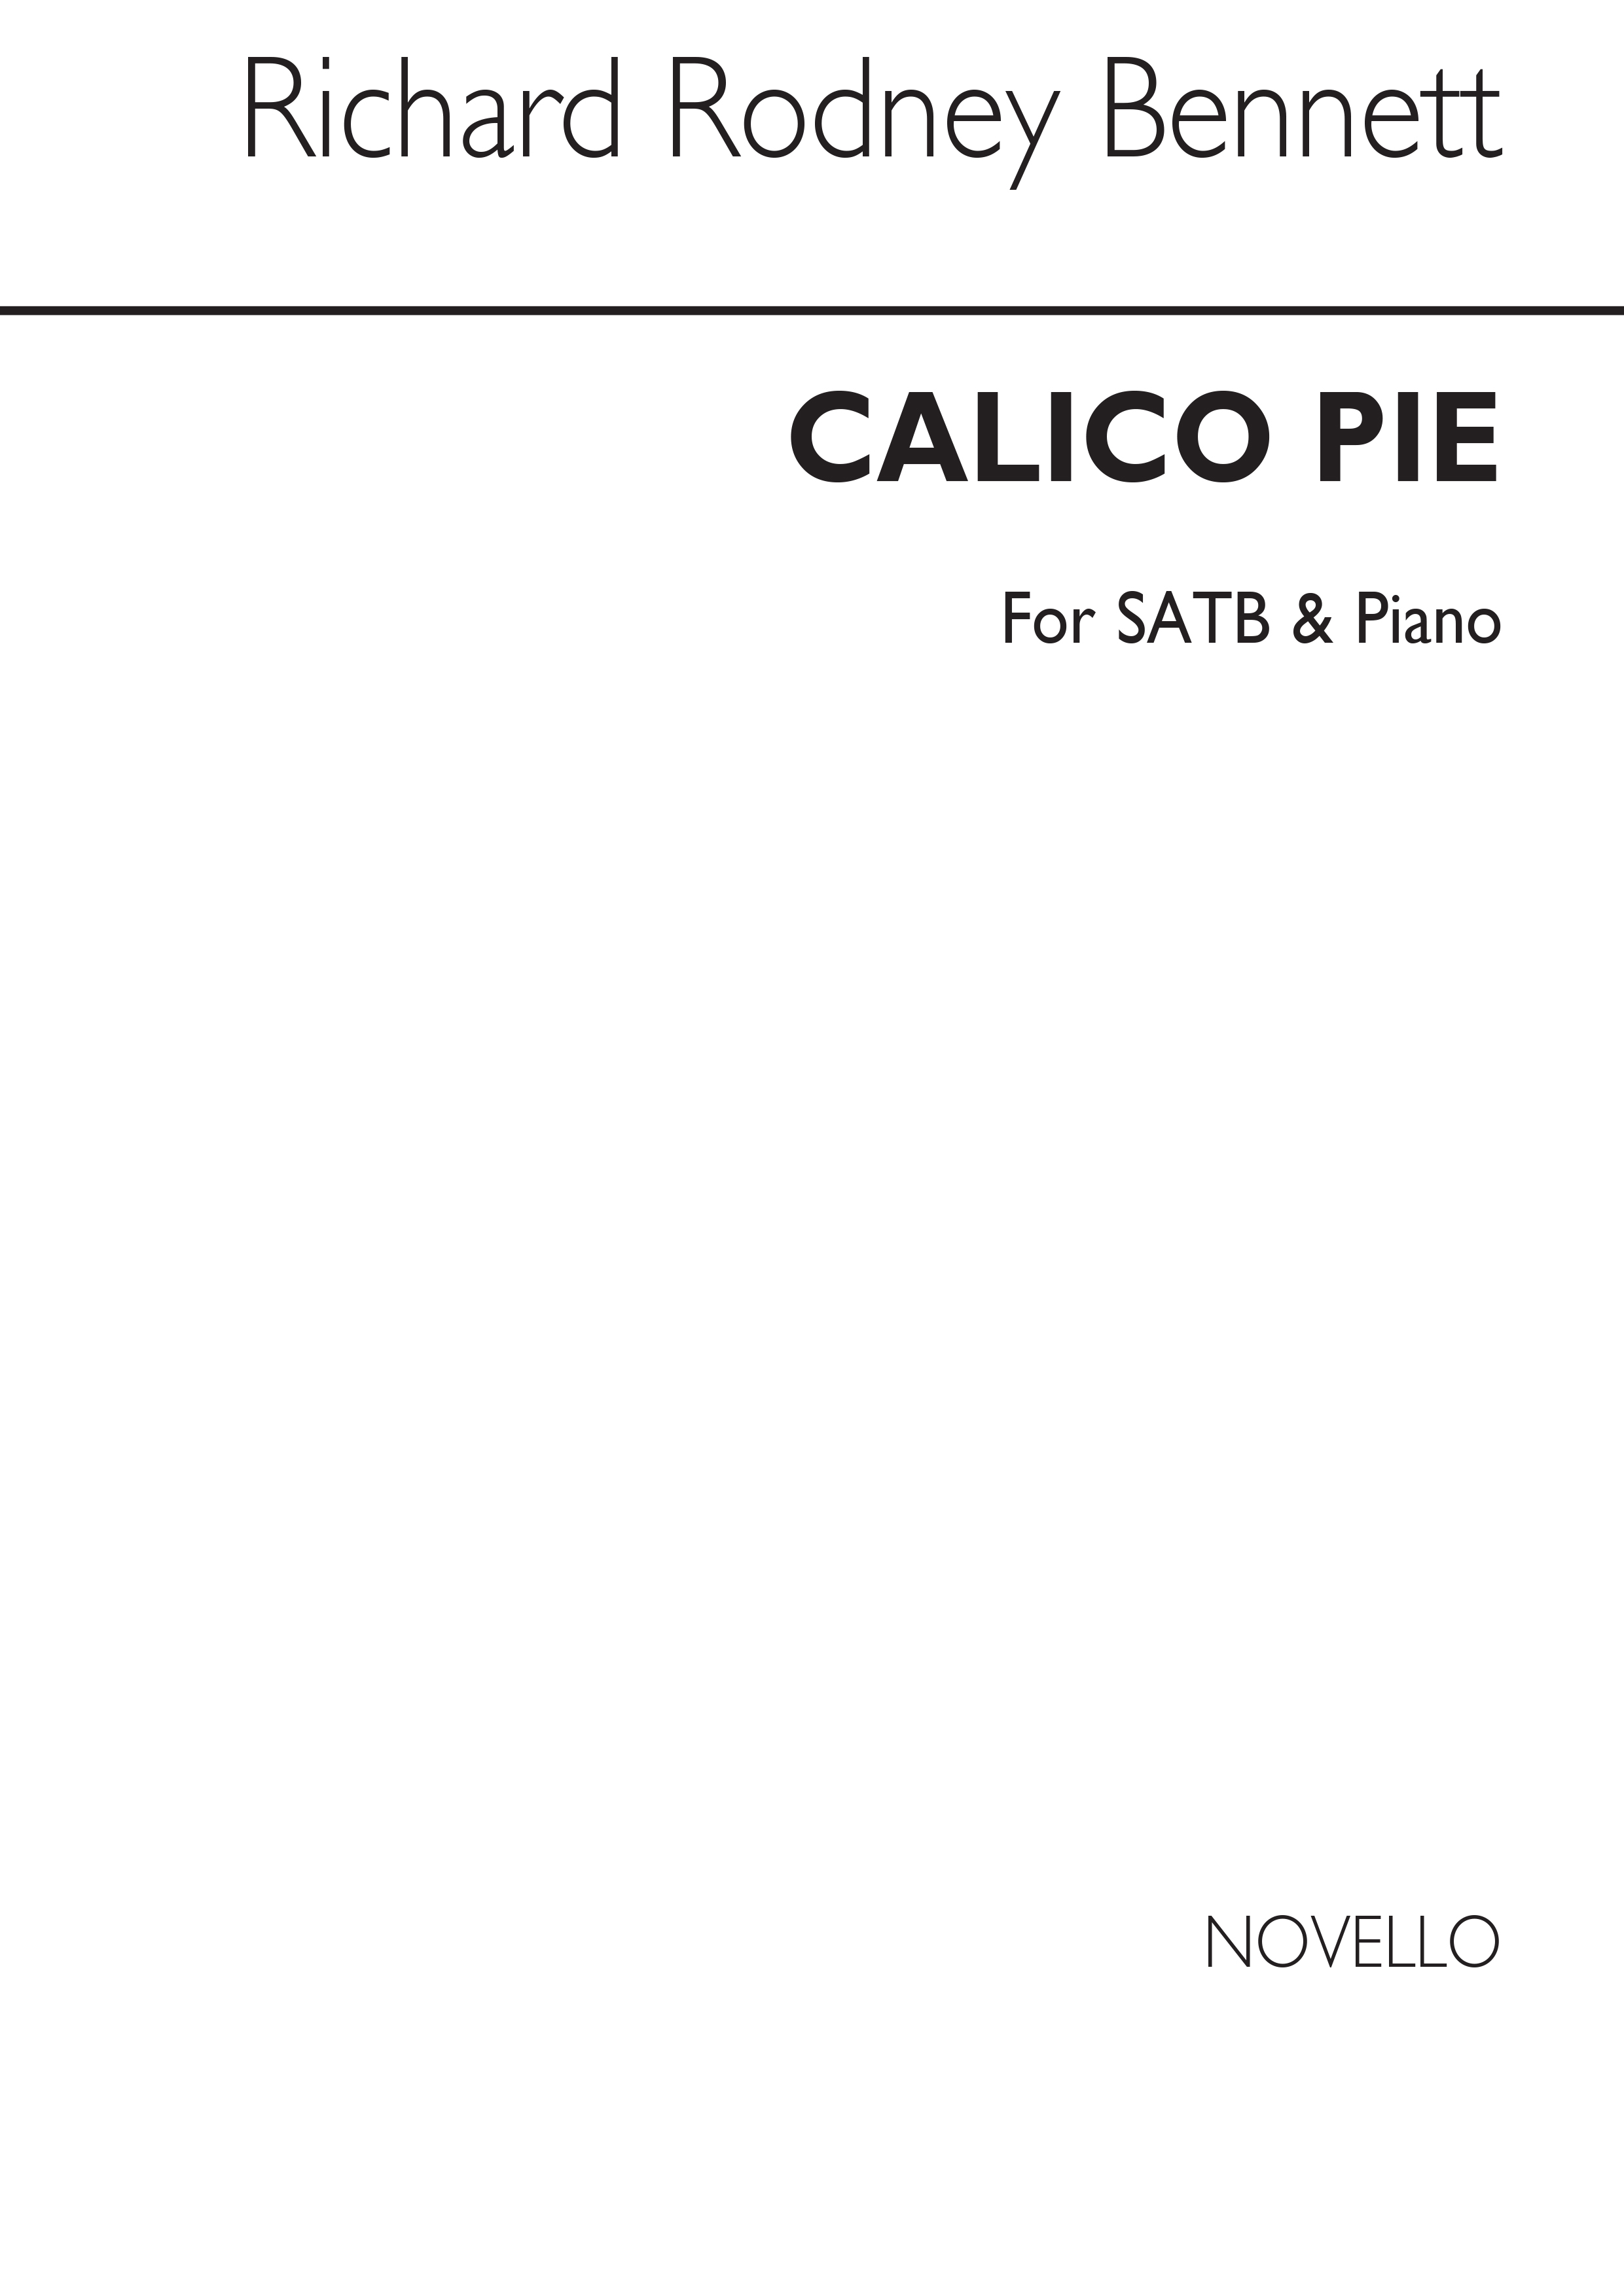 Richard Rodney Bennett: Calico Pie - 1st Movement for SATB Chorus: SATB: Vocal